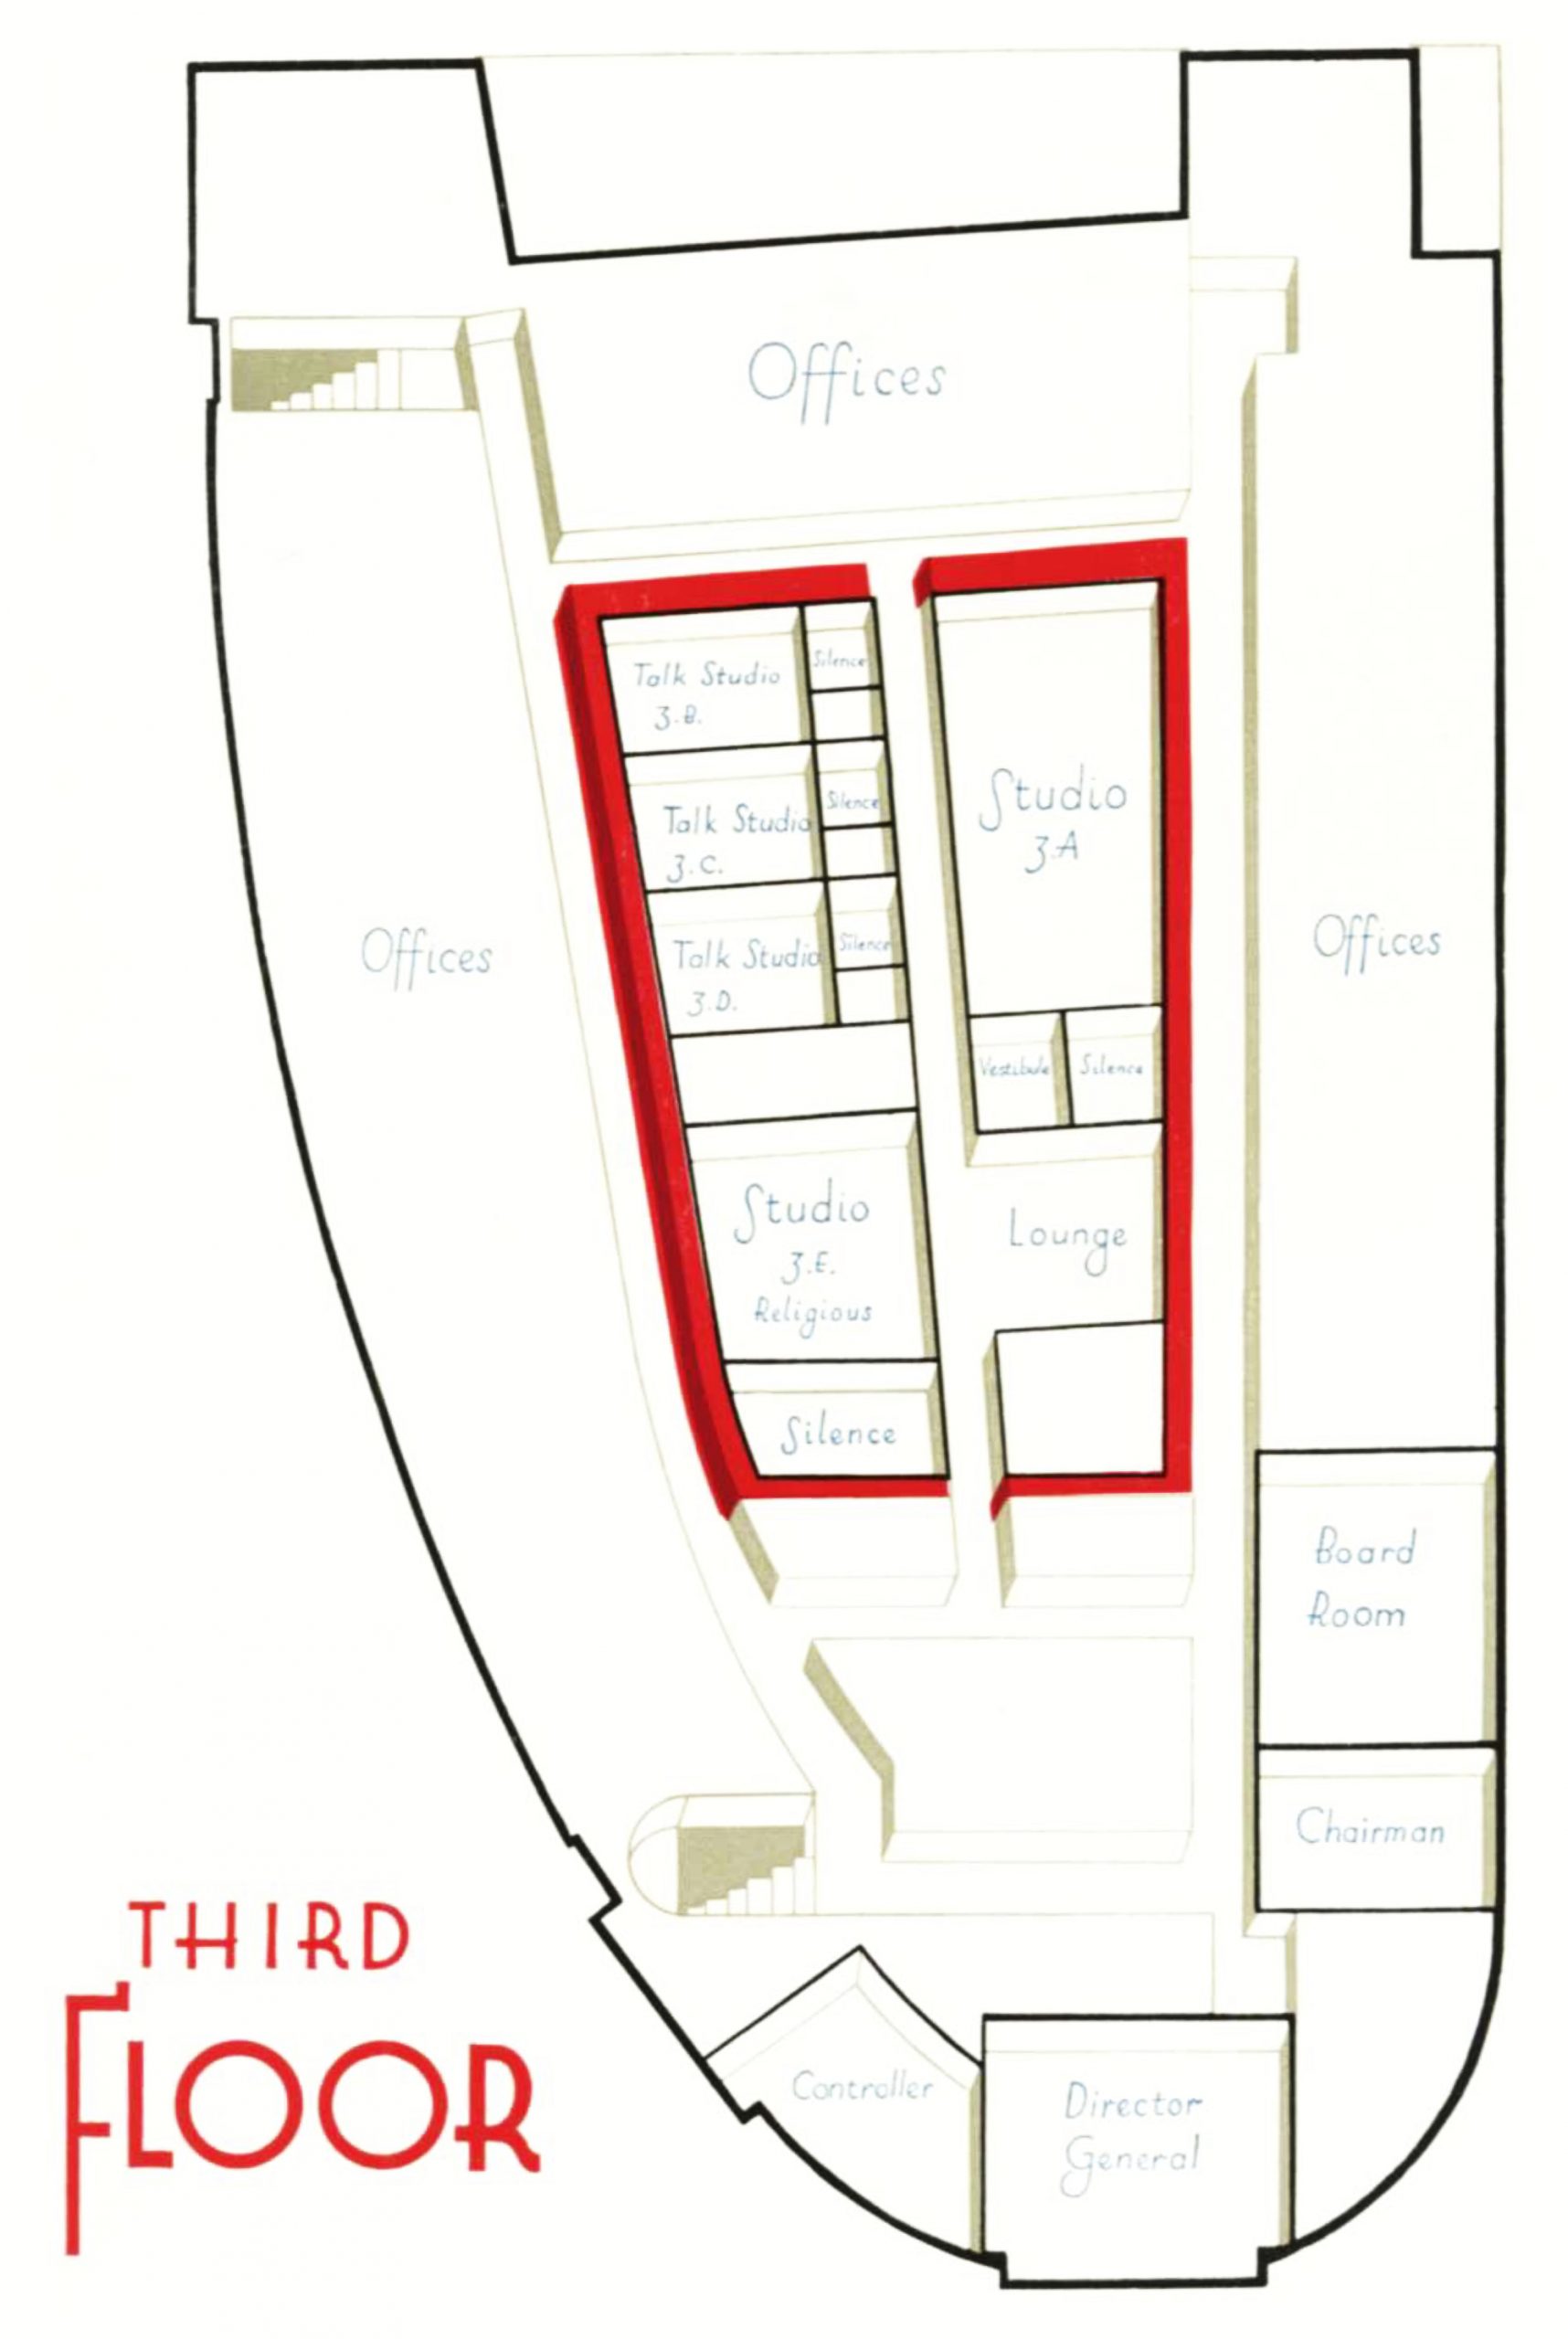 Diagram of the third floor